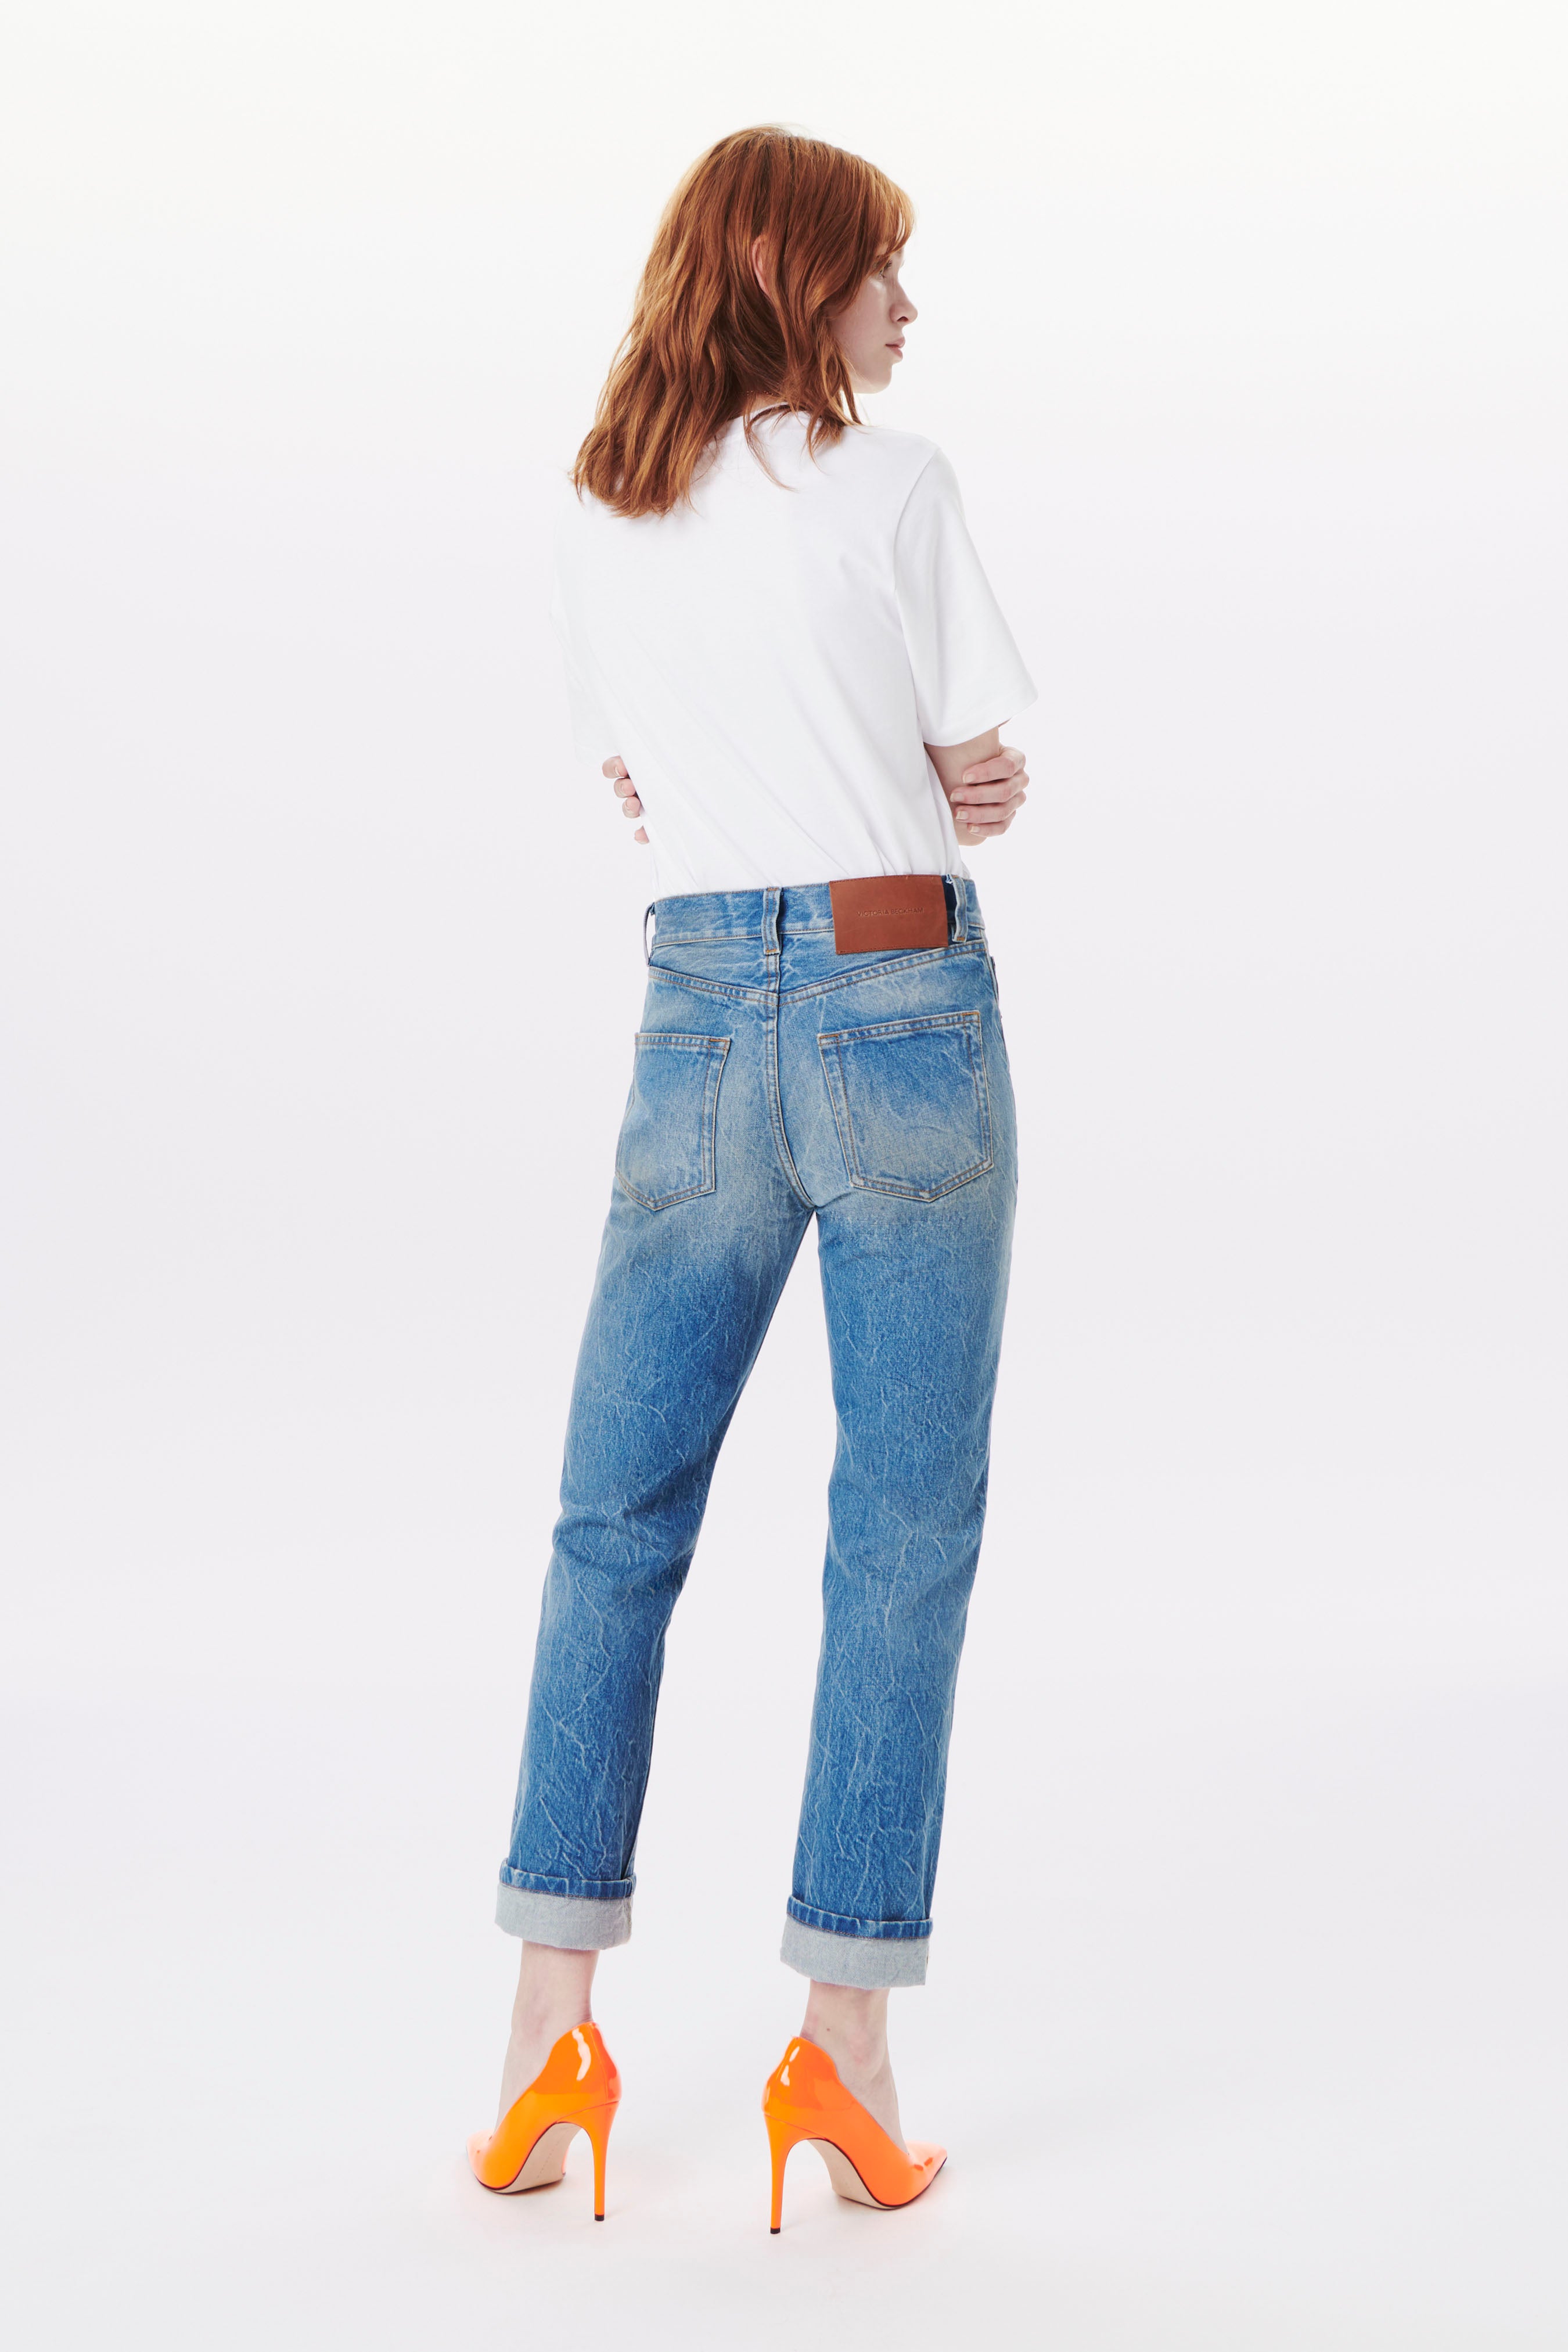 Victoria Beckham Panelled Denim Maxi Skirt - Farfetch